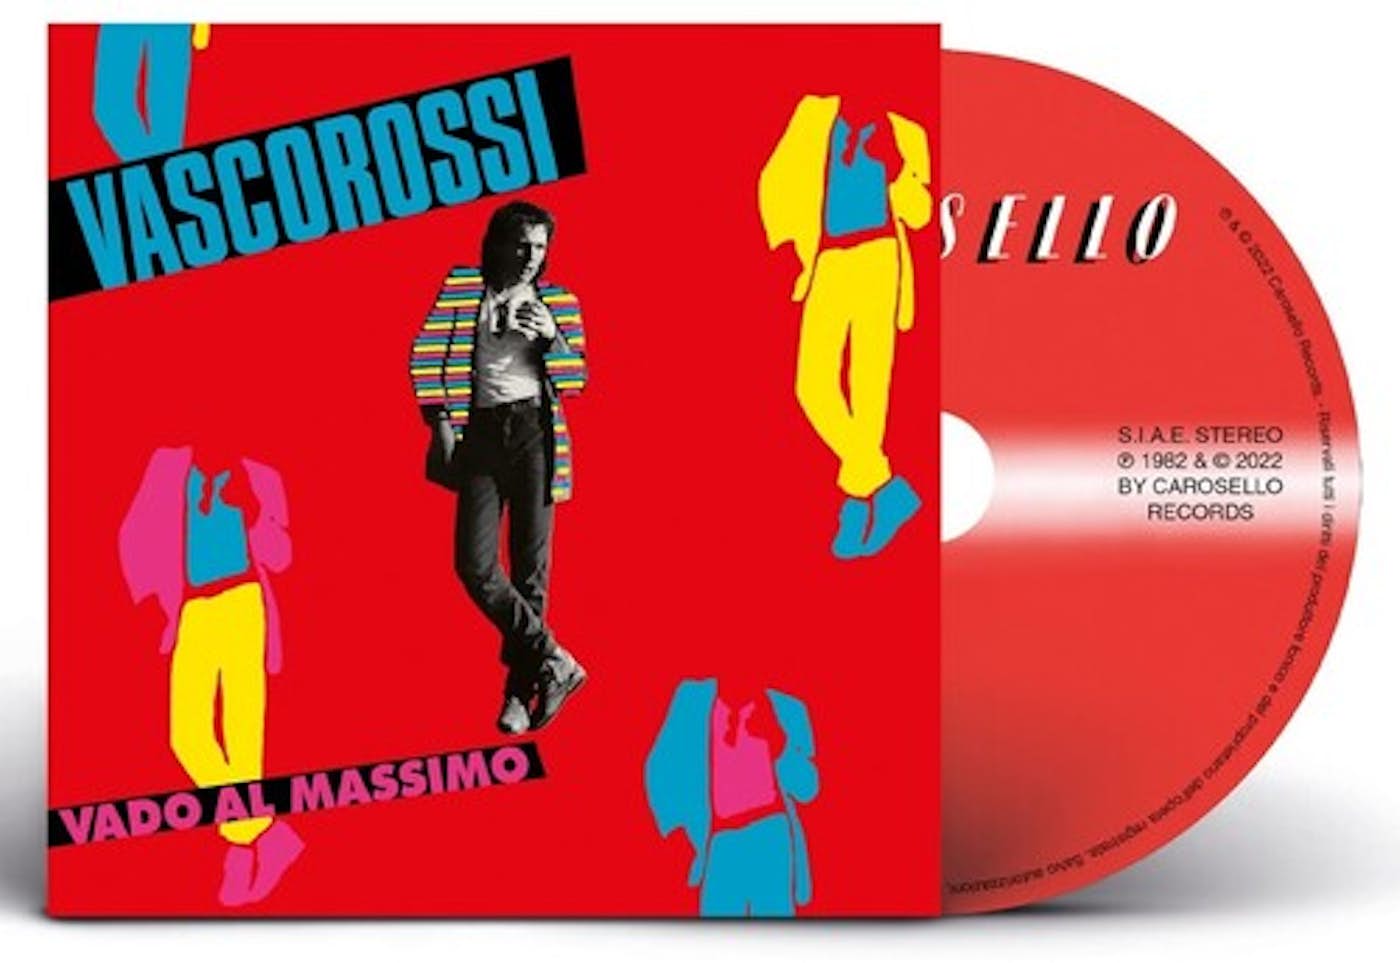 Vasco Rossi VADO AL MASSIMO 40 RPLAY CD